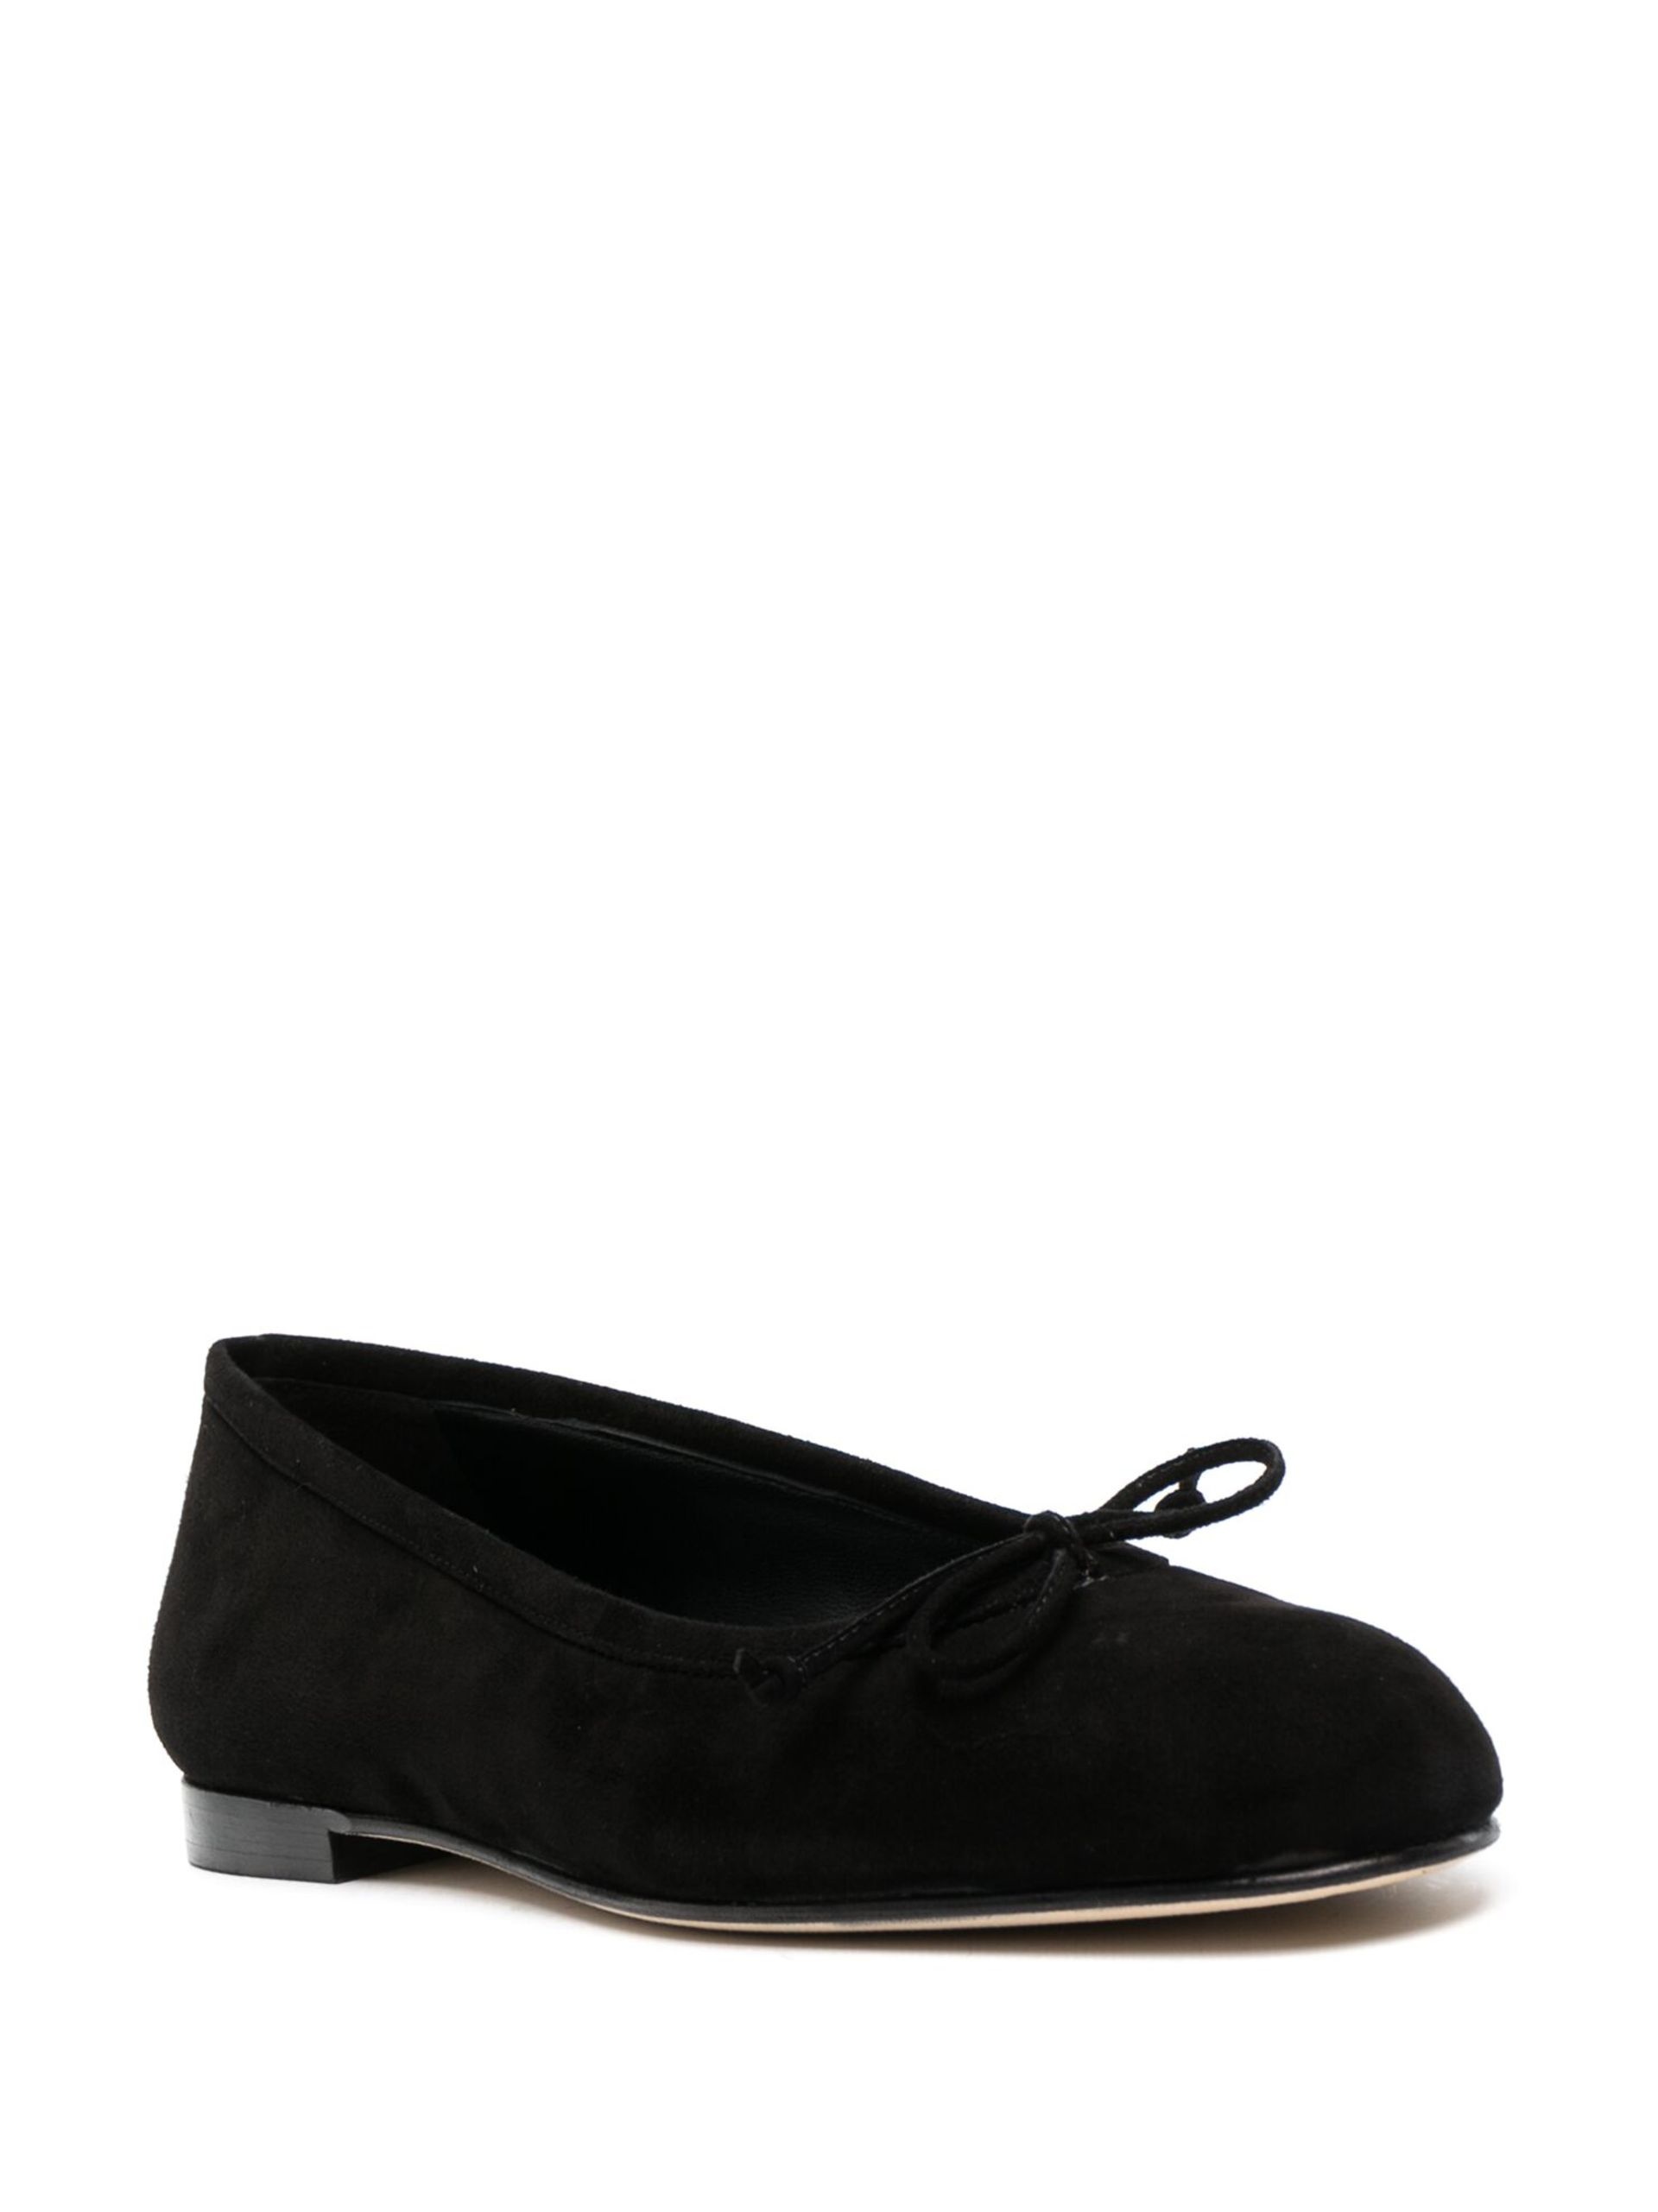 Black Veralli Leather Ballerina Shoes - 2